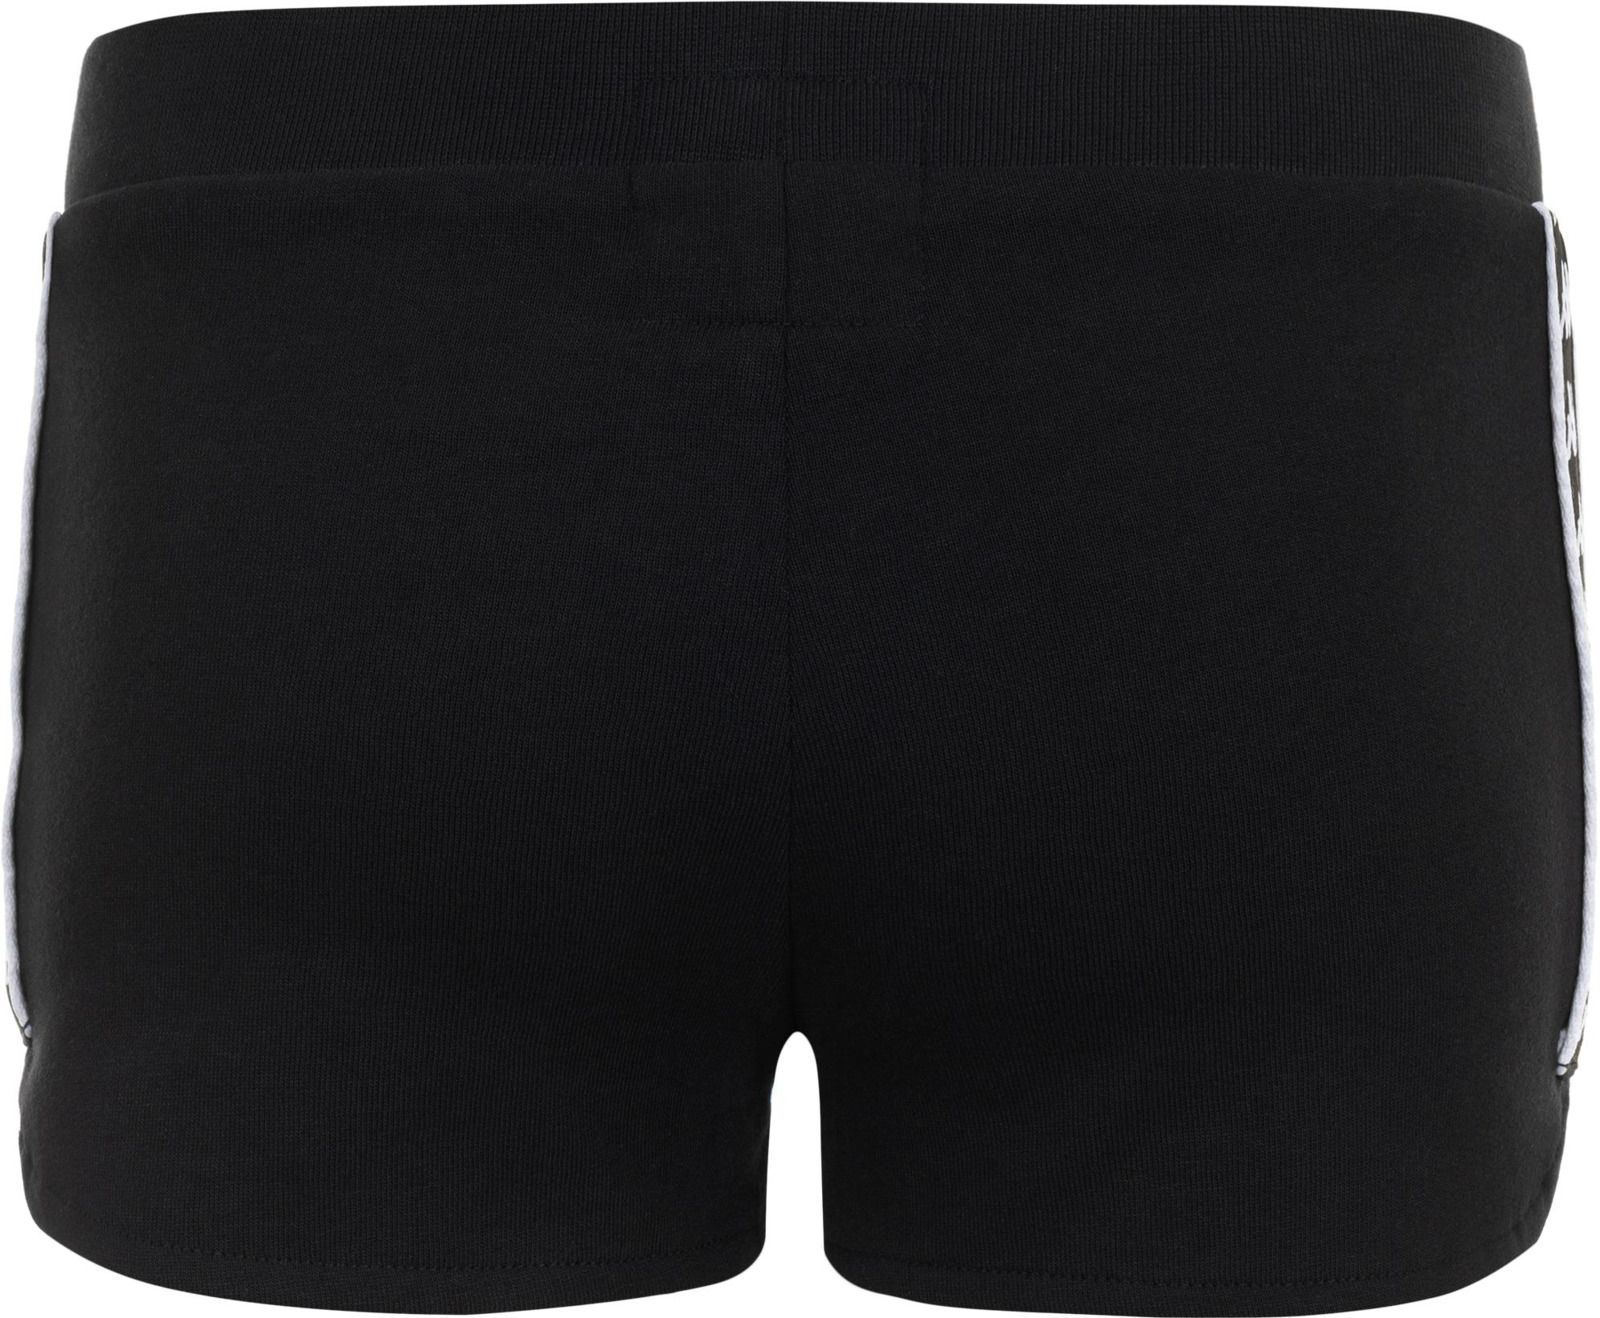    Kappa Girls' Shorts, : . 304KS60-99.  140